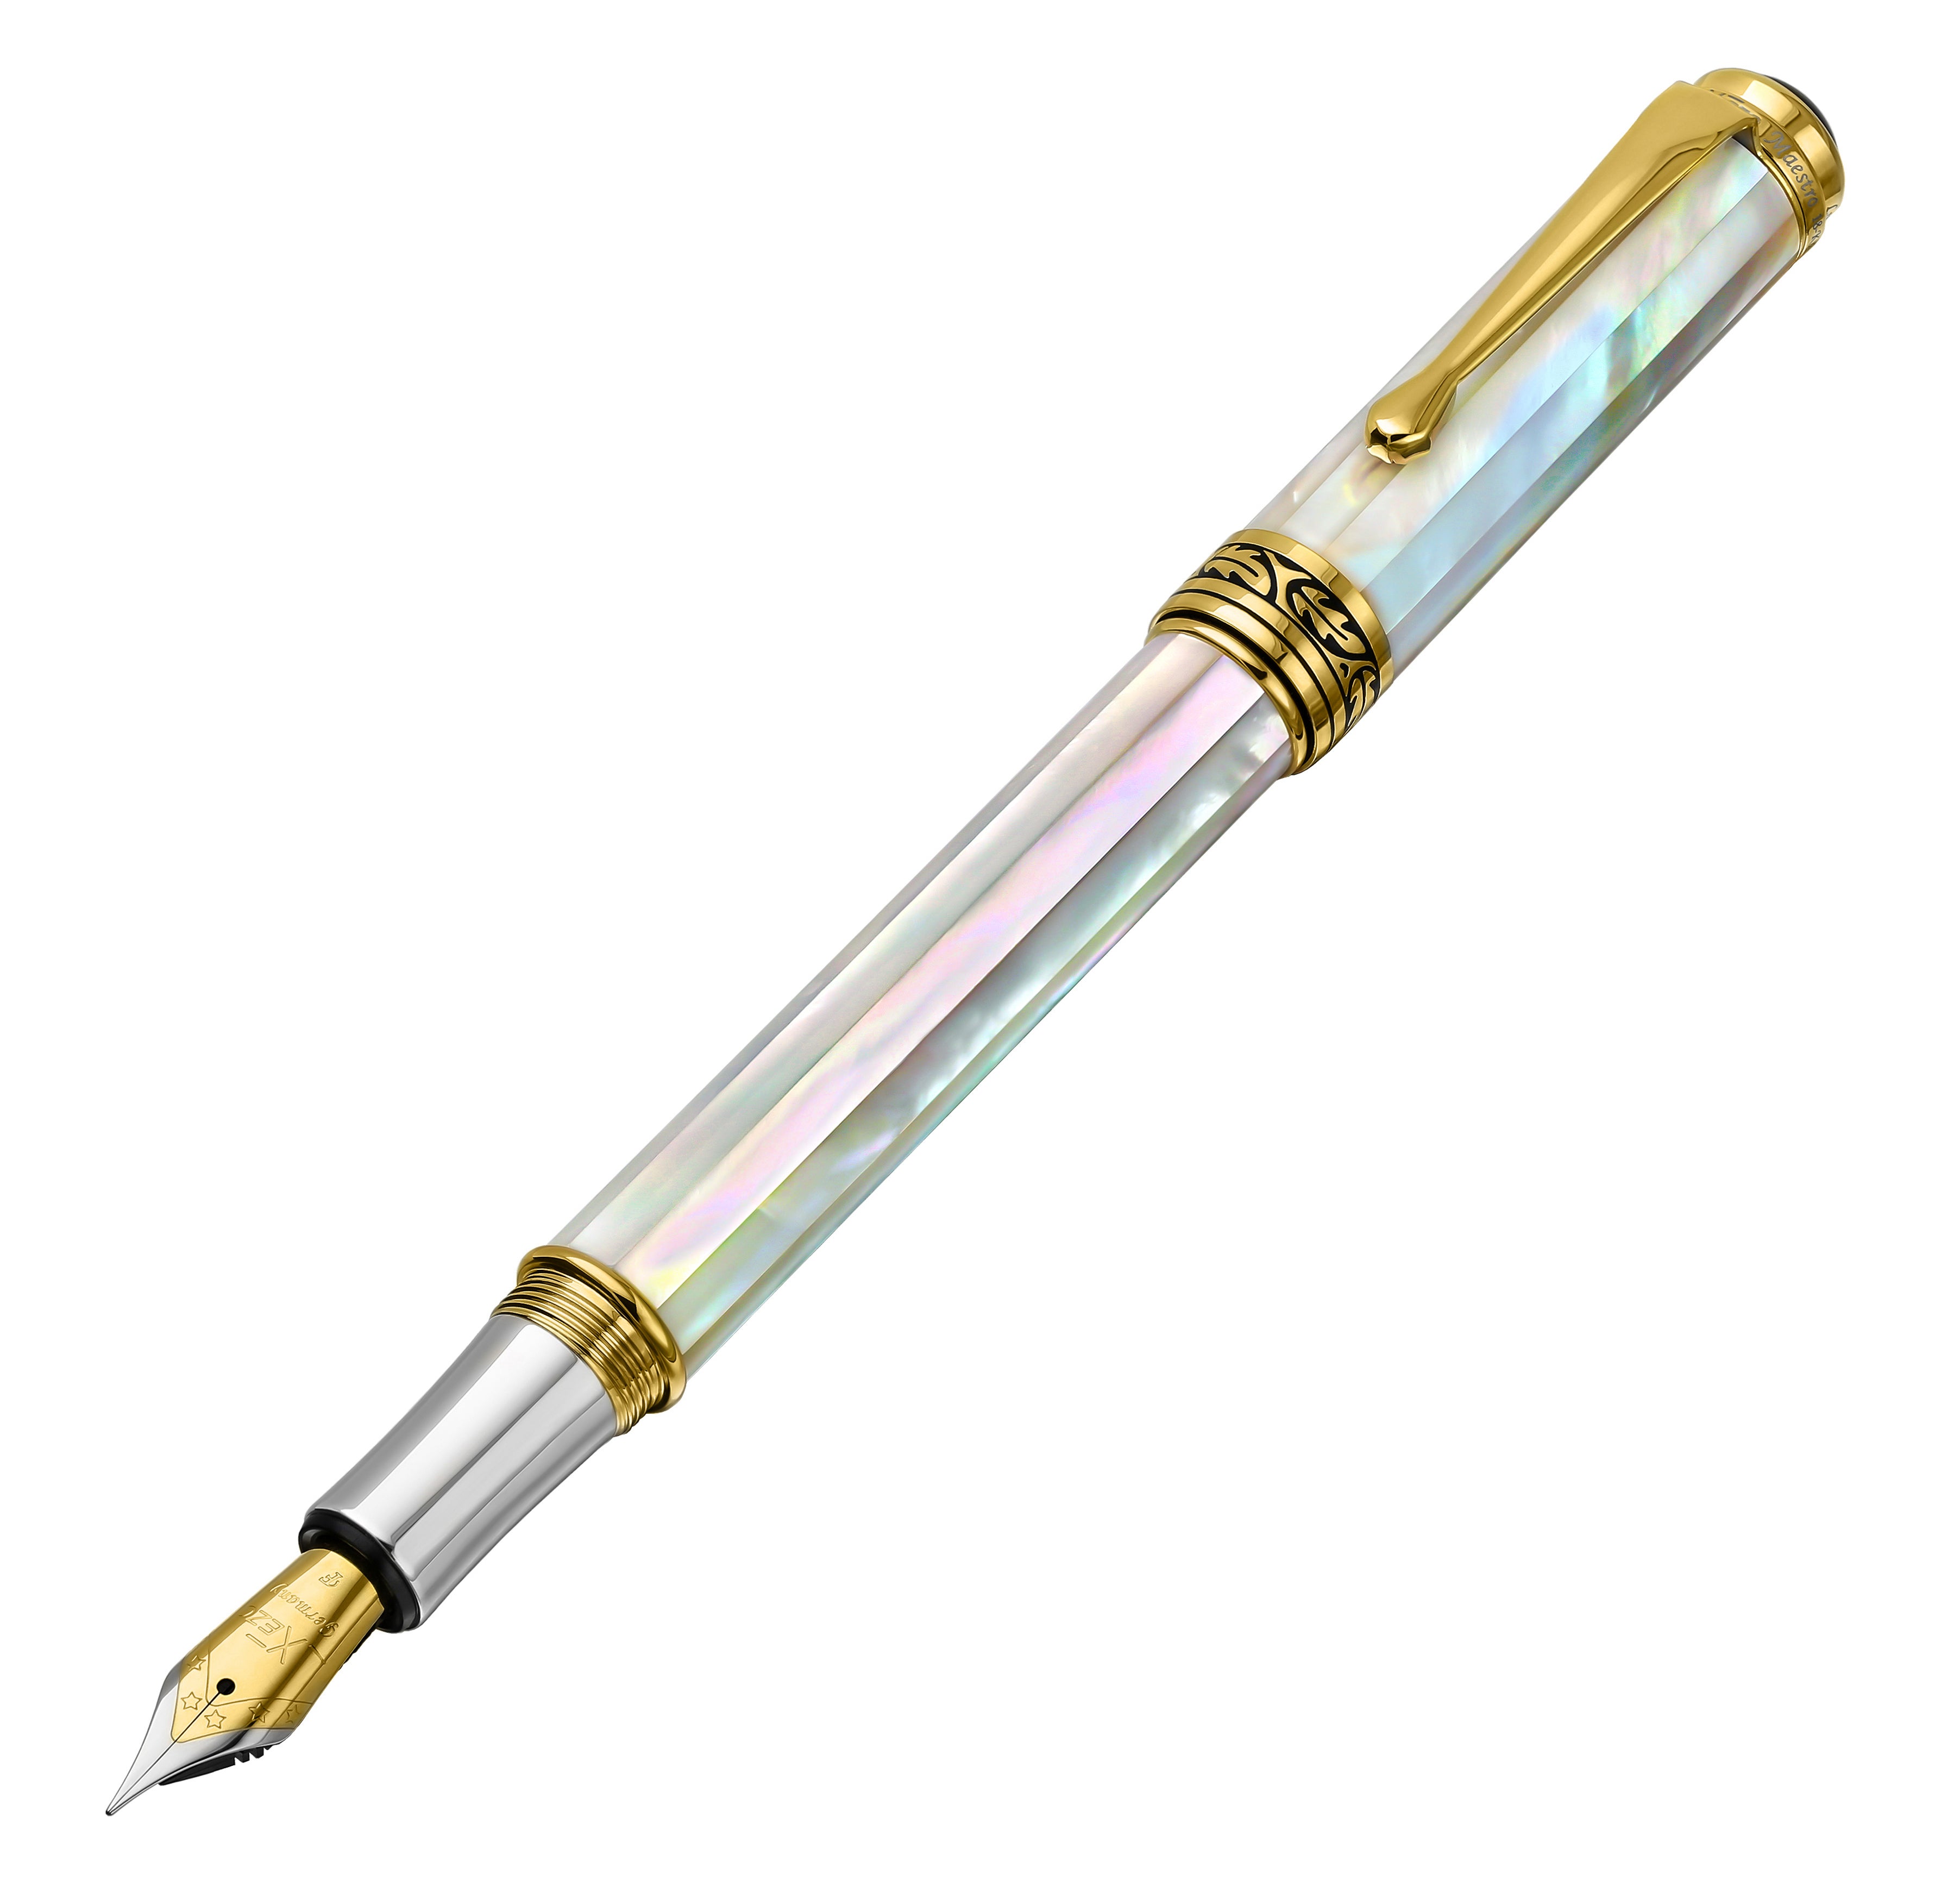 Xezo Maestro オーシャニックオリジン 虹色ホワイトマザーオブパール シリアルナンバー入り中字ペン。18金、プラチナメッキ。同じペンは2つと  通販